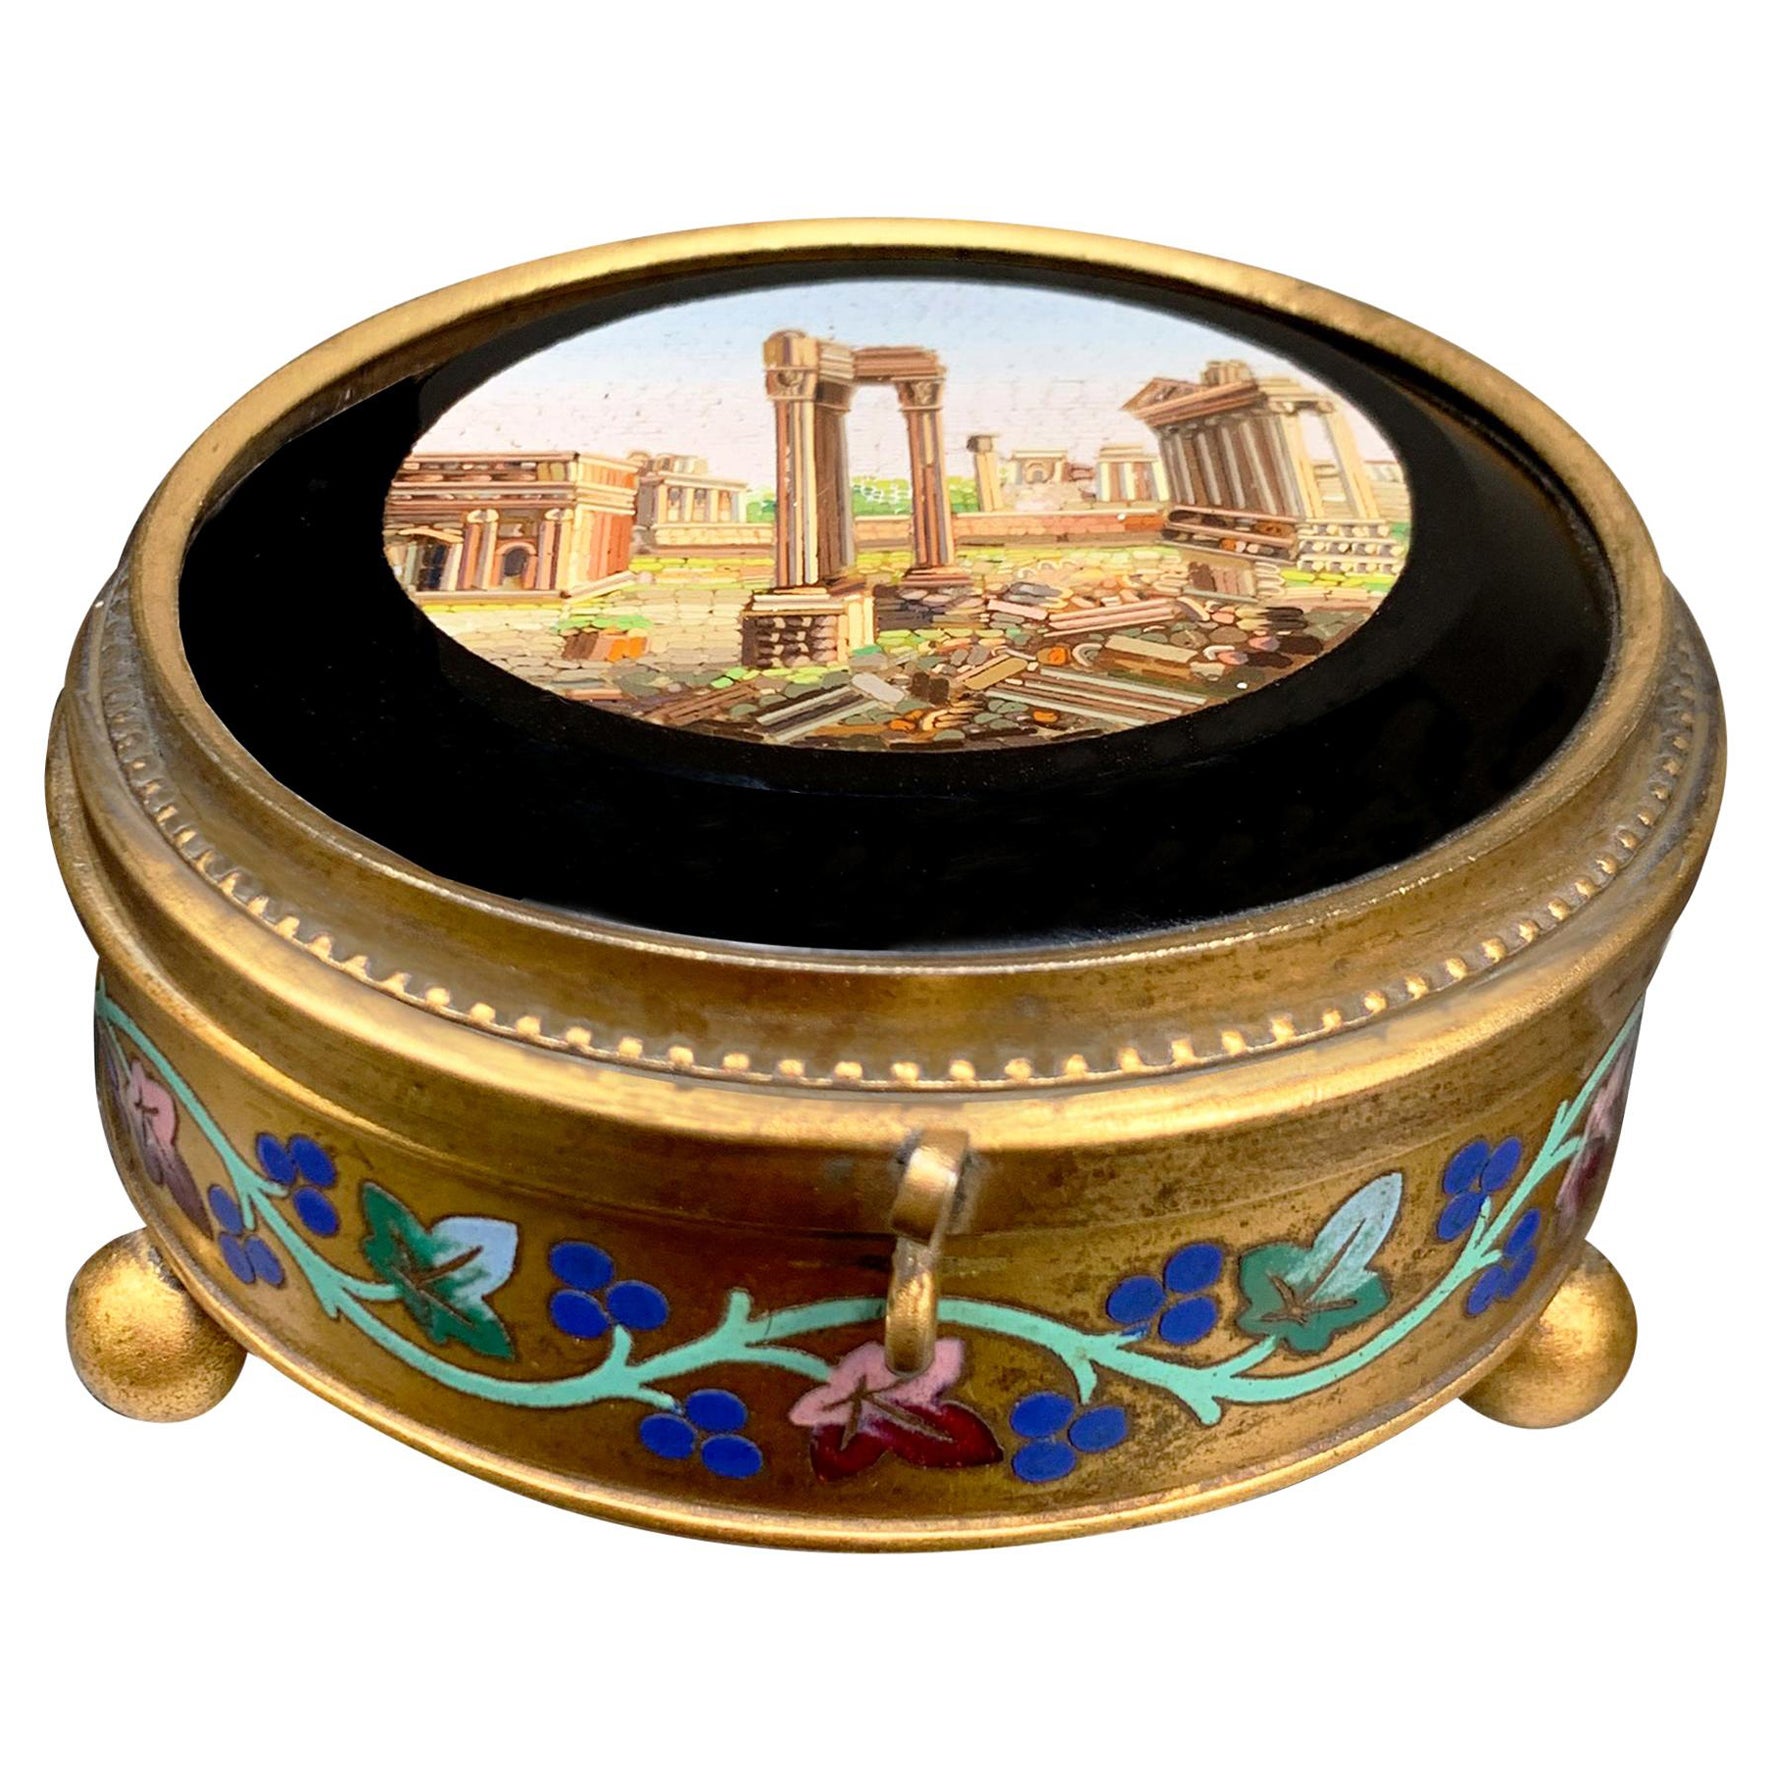 Roman Forum Micromosaic 'circa 1850' Set in a 24 Karat Gilded Bronze Box For Sale